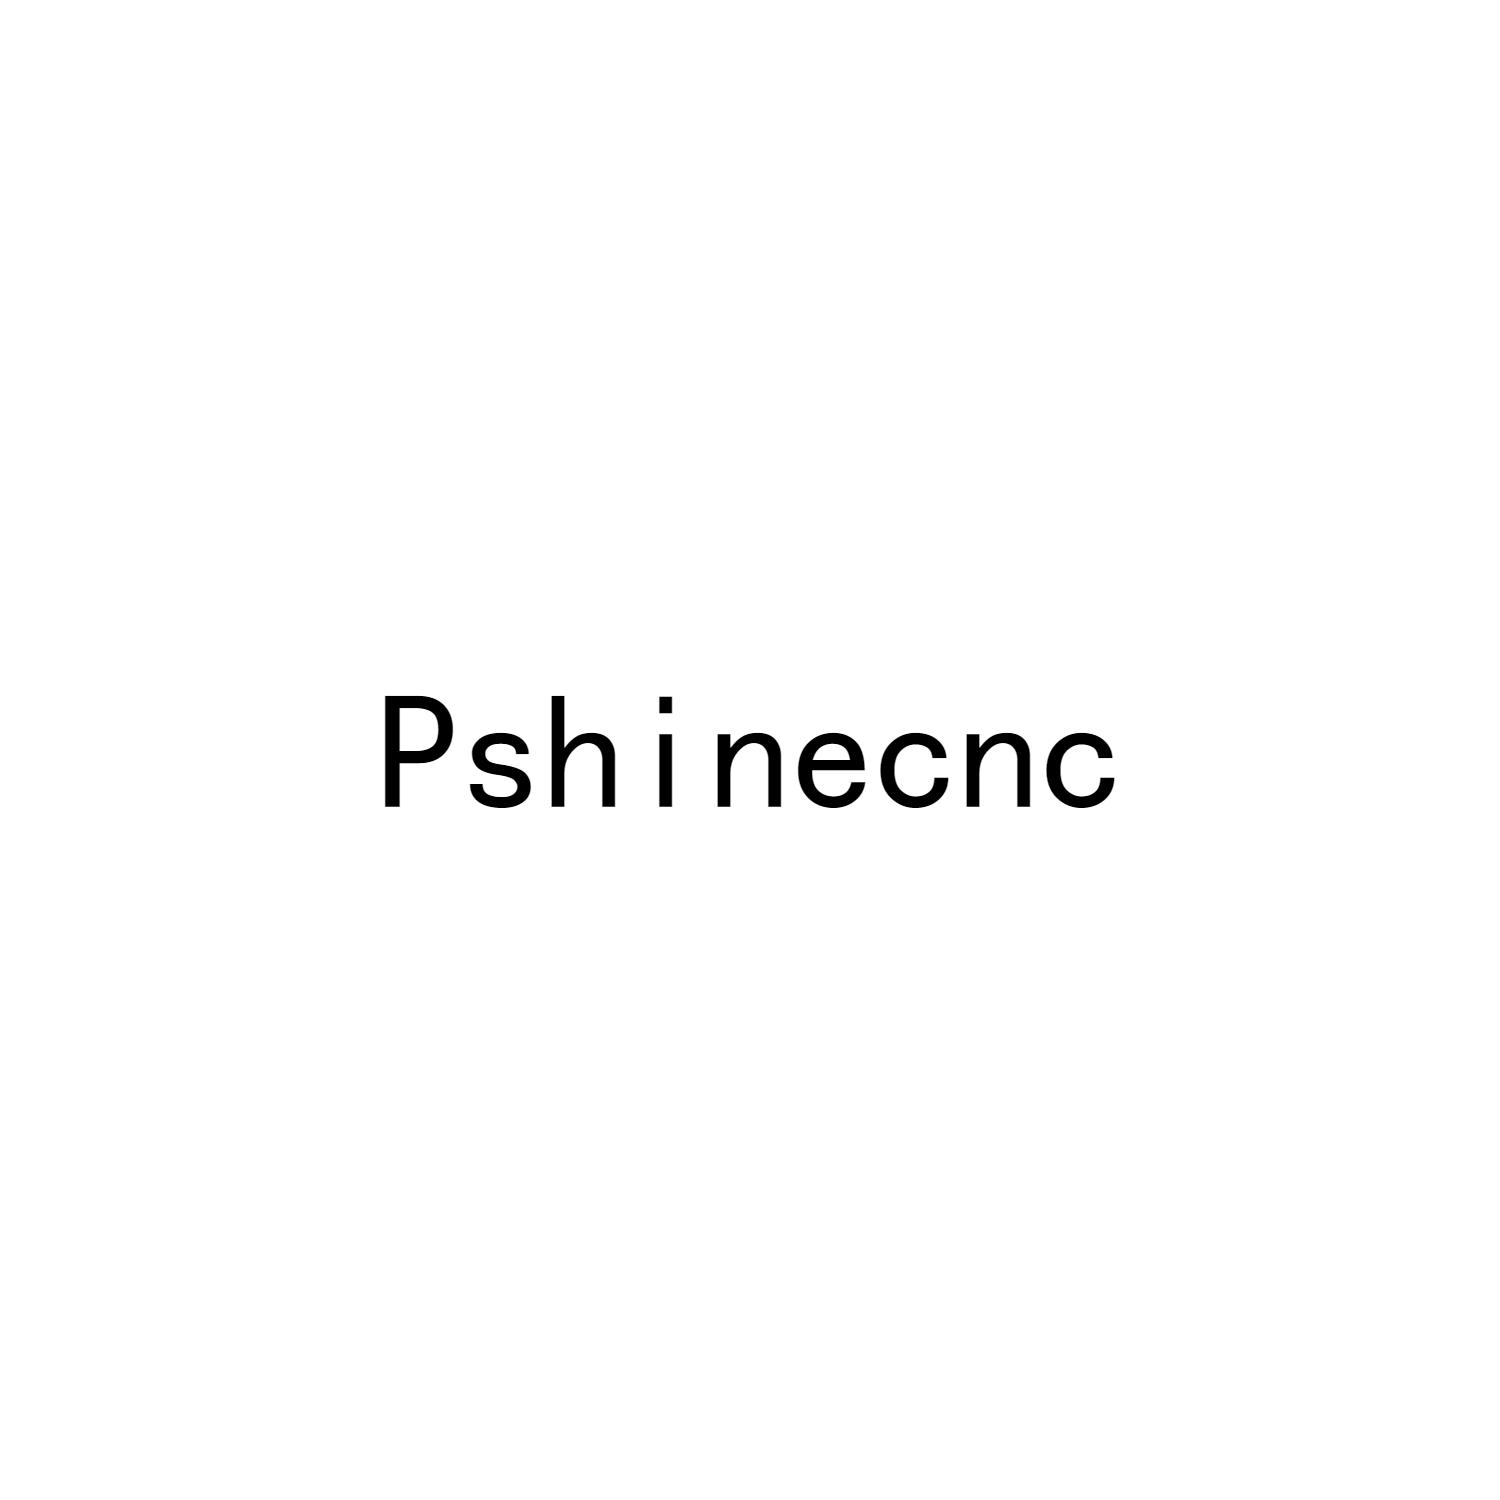 PSHINECNC 商标公告